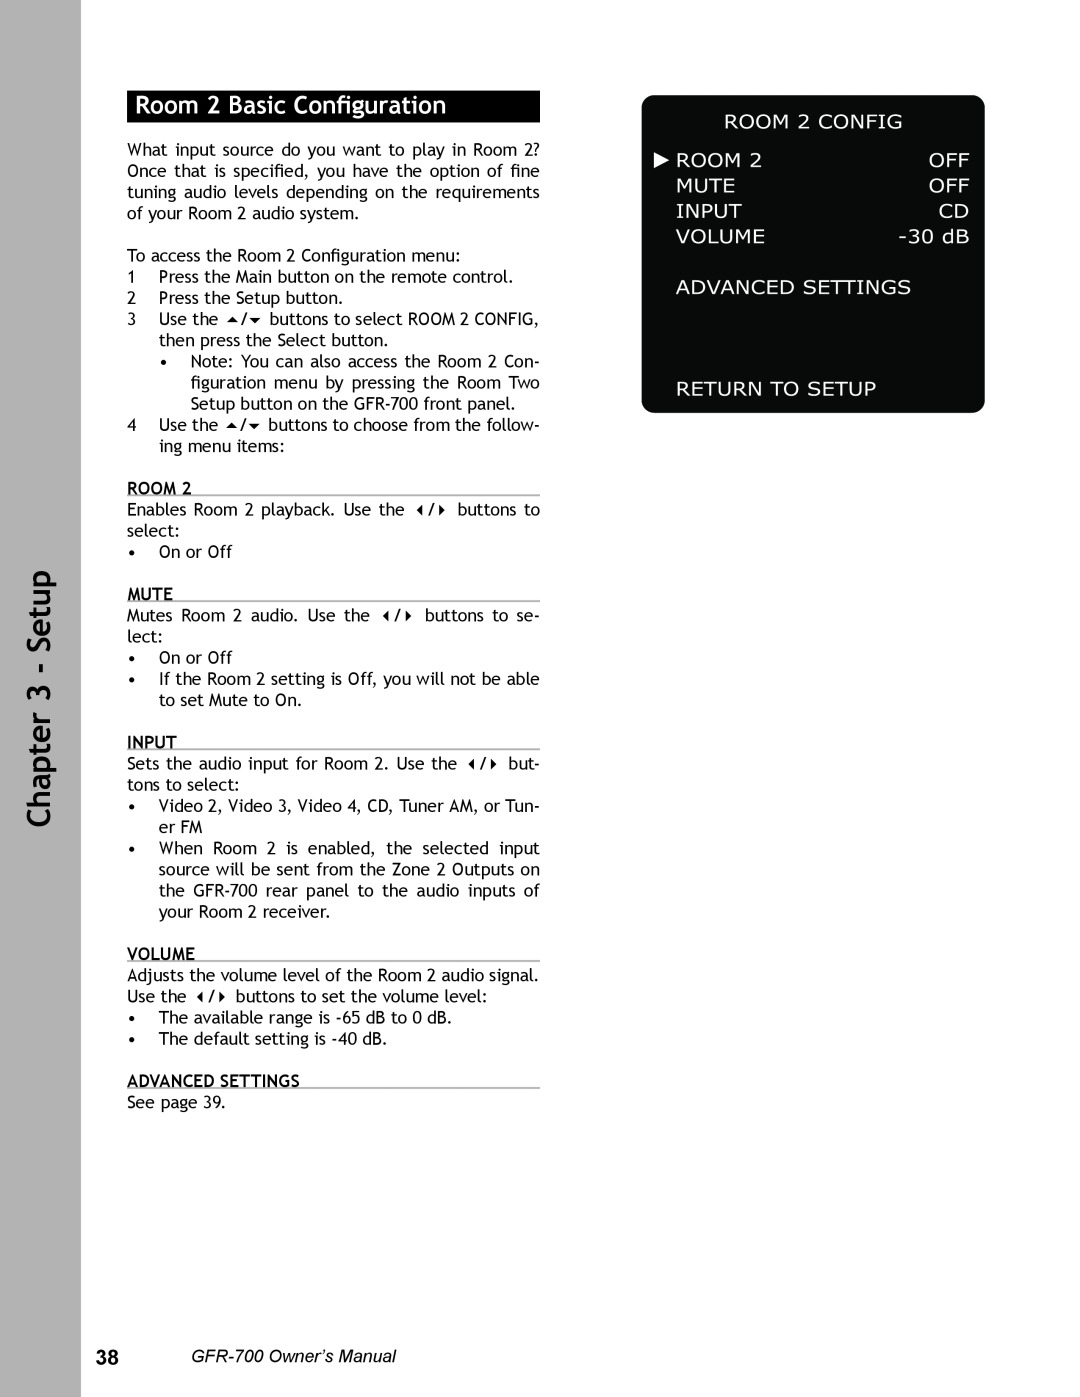 Adcom GFR-700 user manual Room 2 Basic Conﬁguration, Mute, Advanced Settings, Setup, Input, Volume 